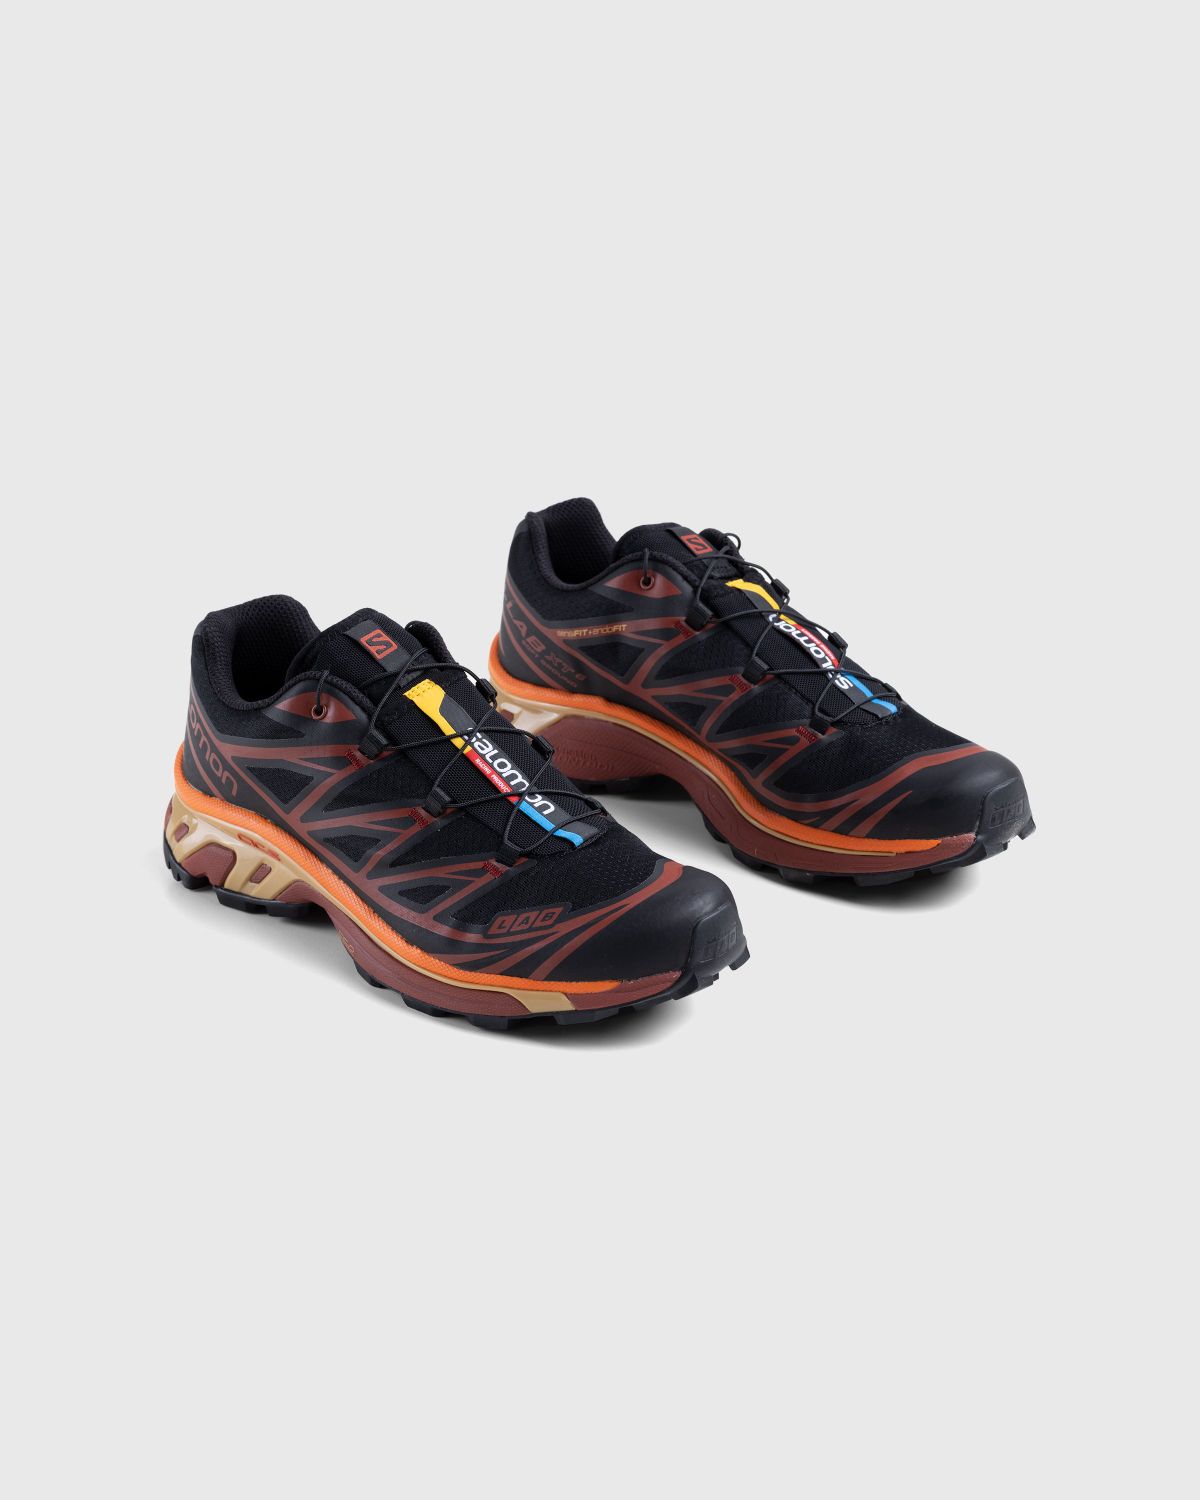 Salomon – XT-6 Black/Chocolate Plum/Vibrant Orange - Sneakers - Brown - Image 3